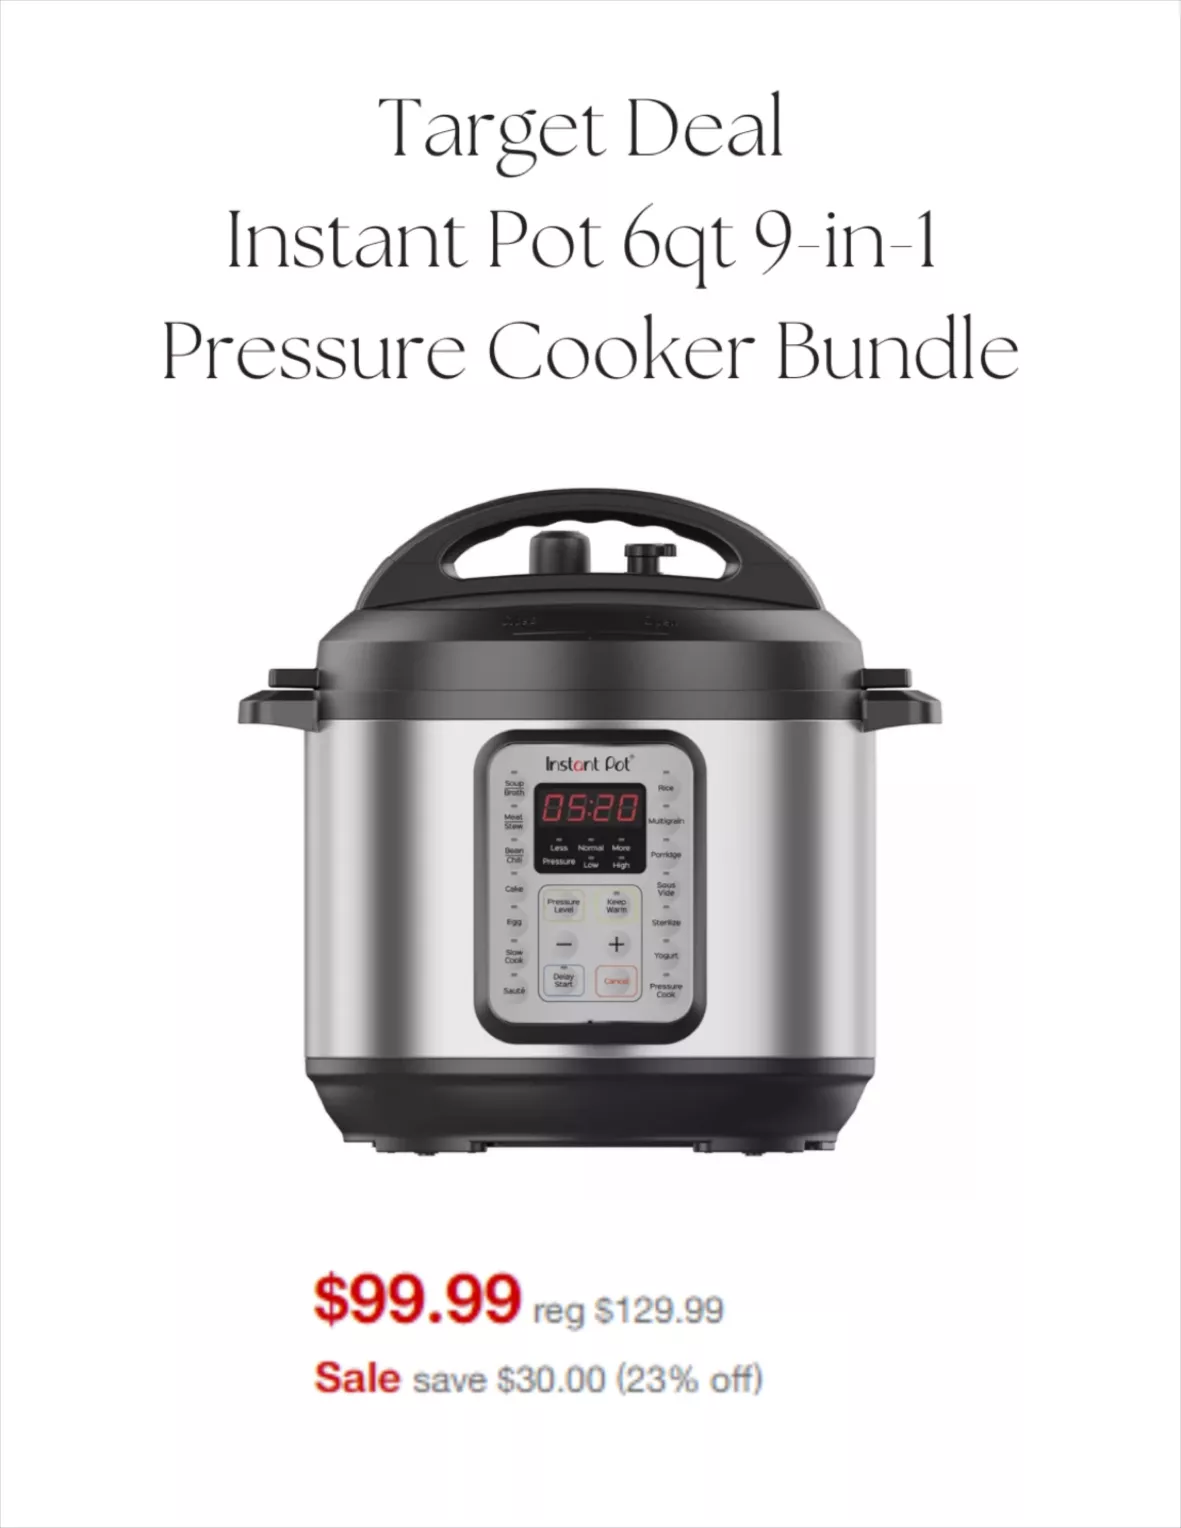 Instant Pot 6qt 9-in-1 Pressure Cooker Bundle : Target